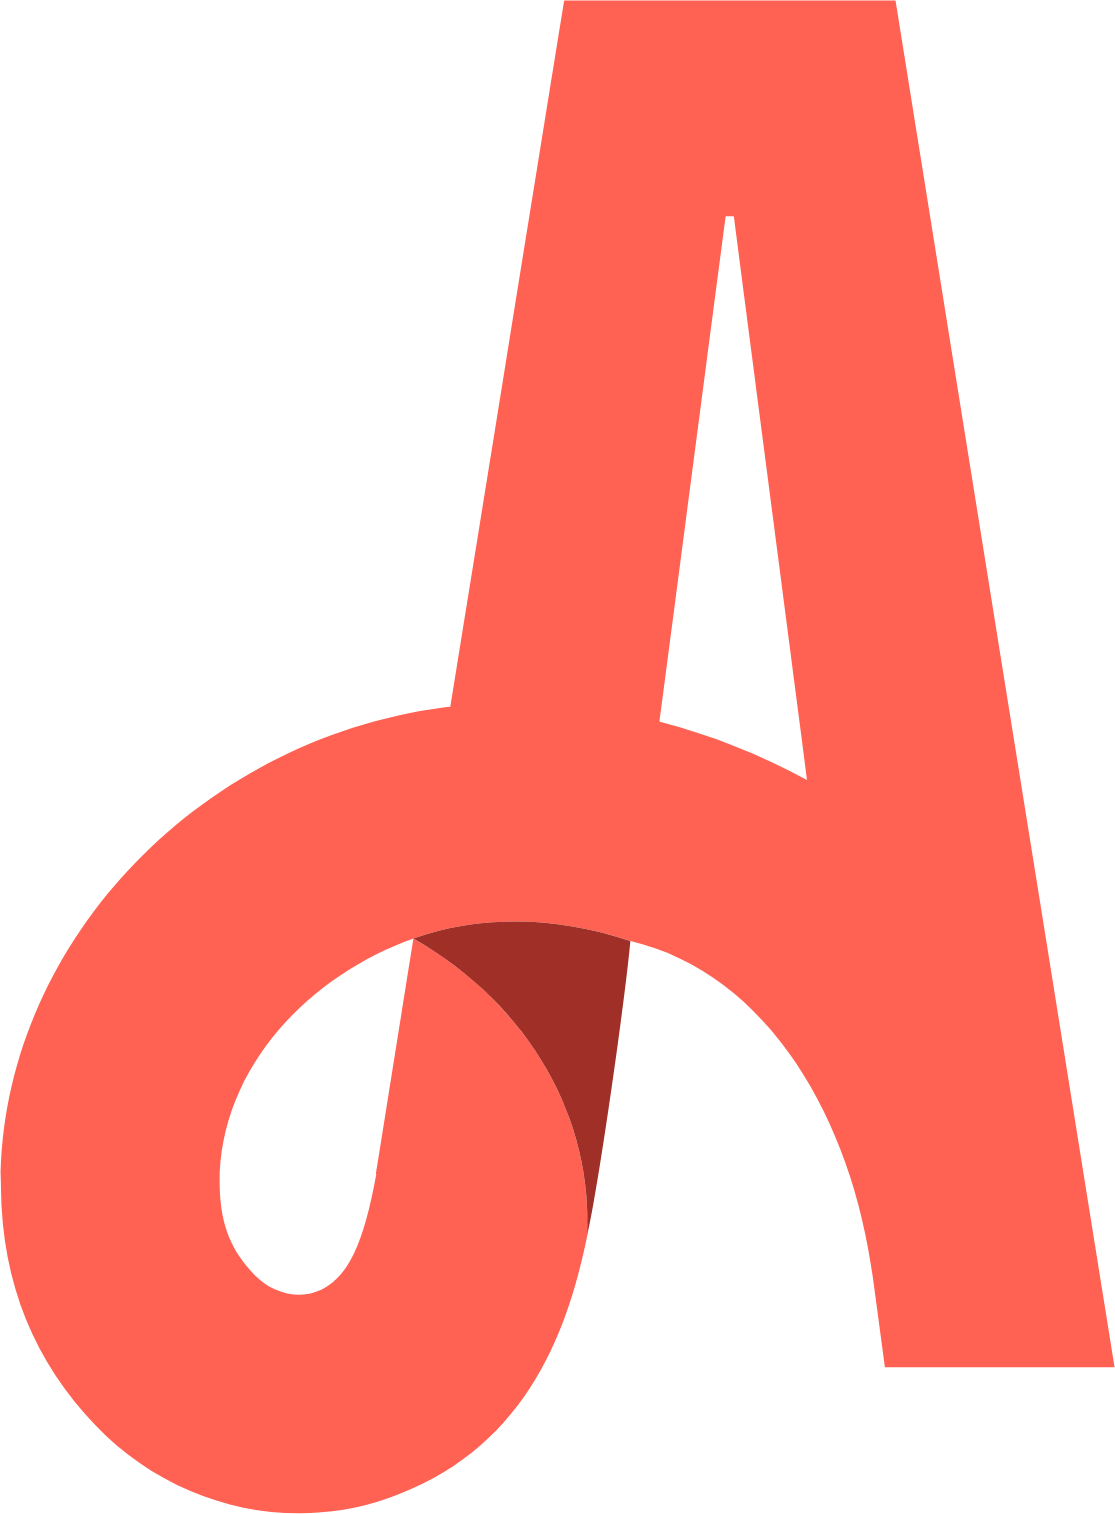 ANGI Homeservices logo (transparent PNG)